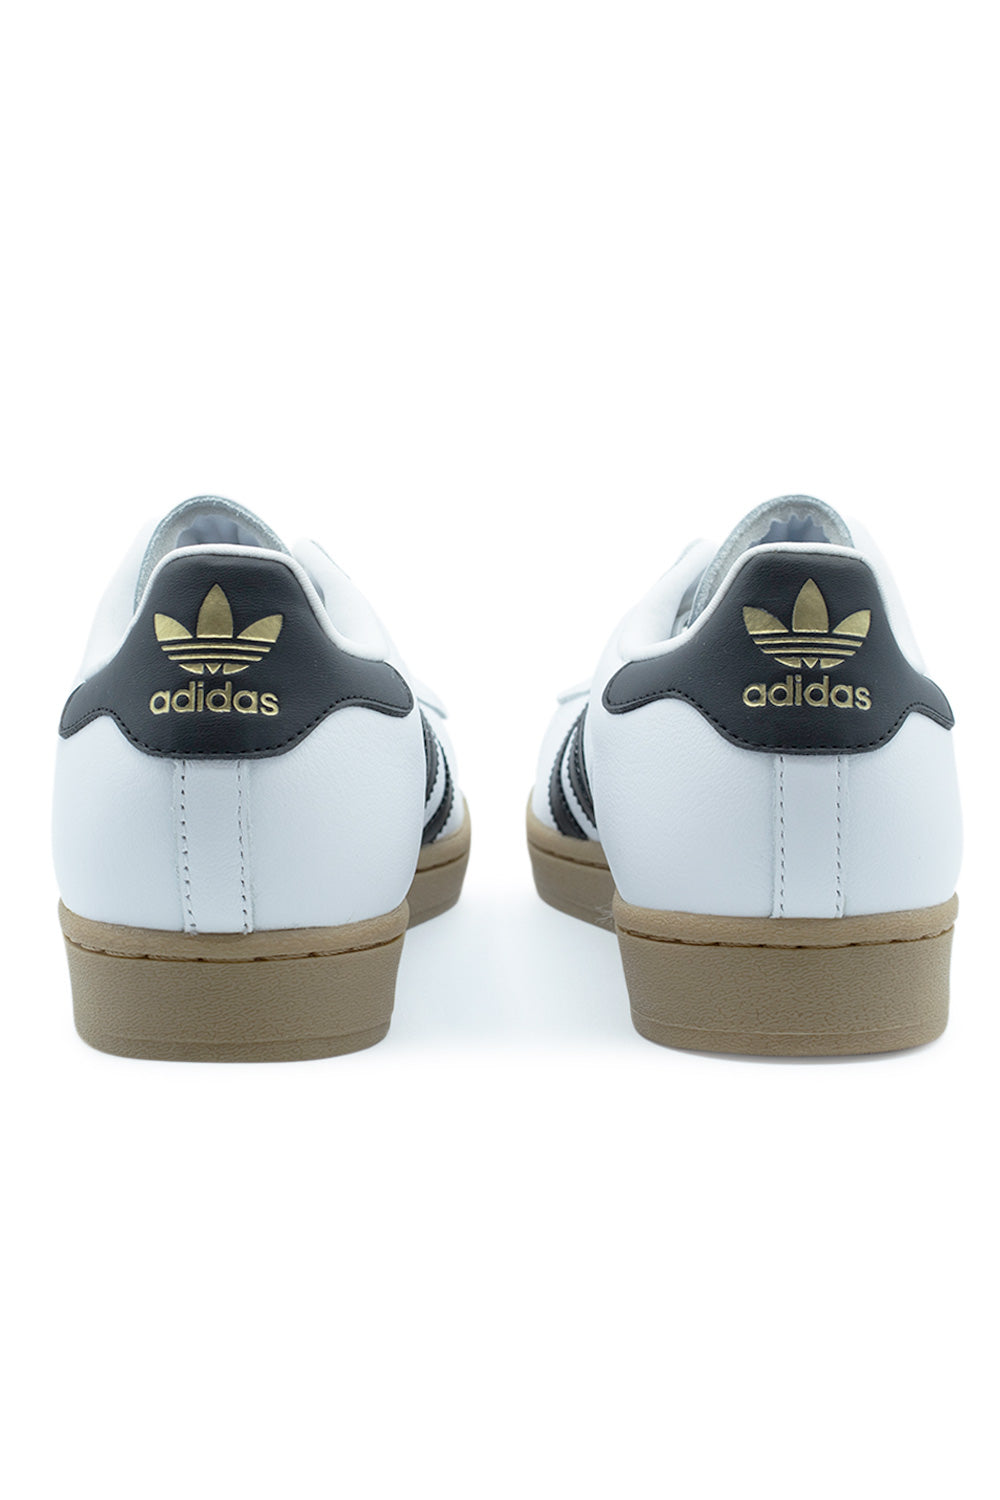 Adidas Superstar ADV Shoe Cloud White / Core Black / Gum - BONKERS